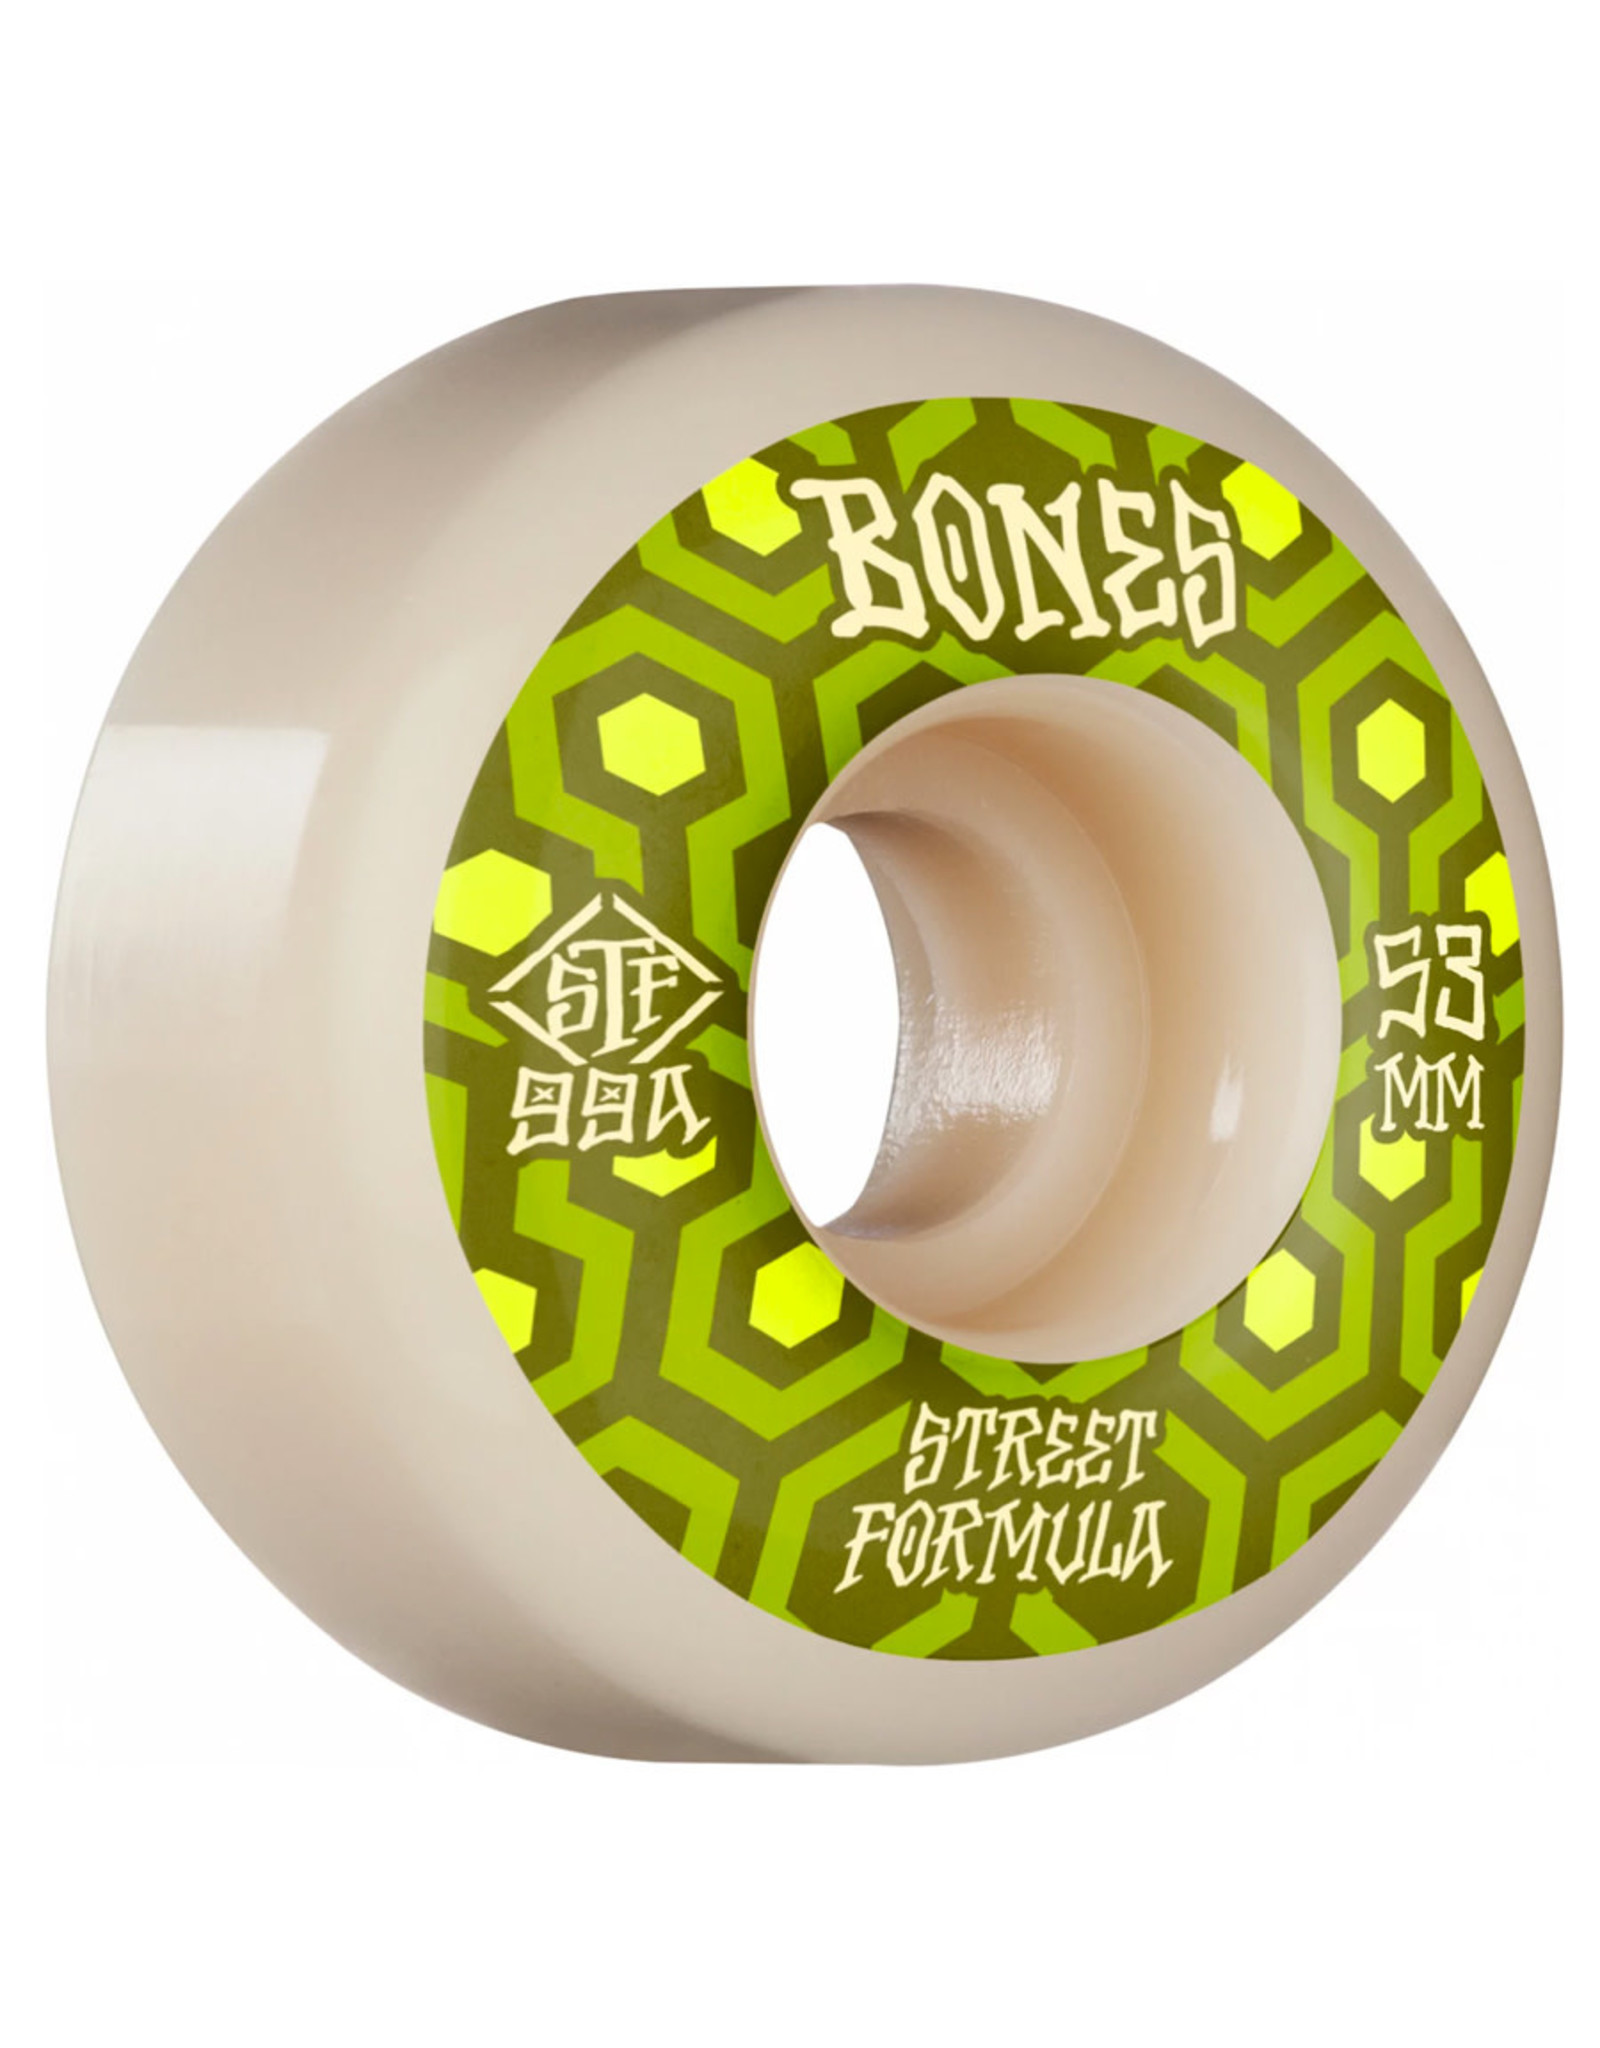 Bones Bones Wheels STF Retros V1 Standards White (53mm/99a)